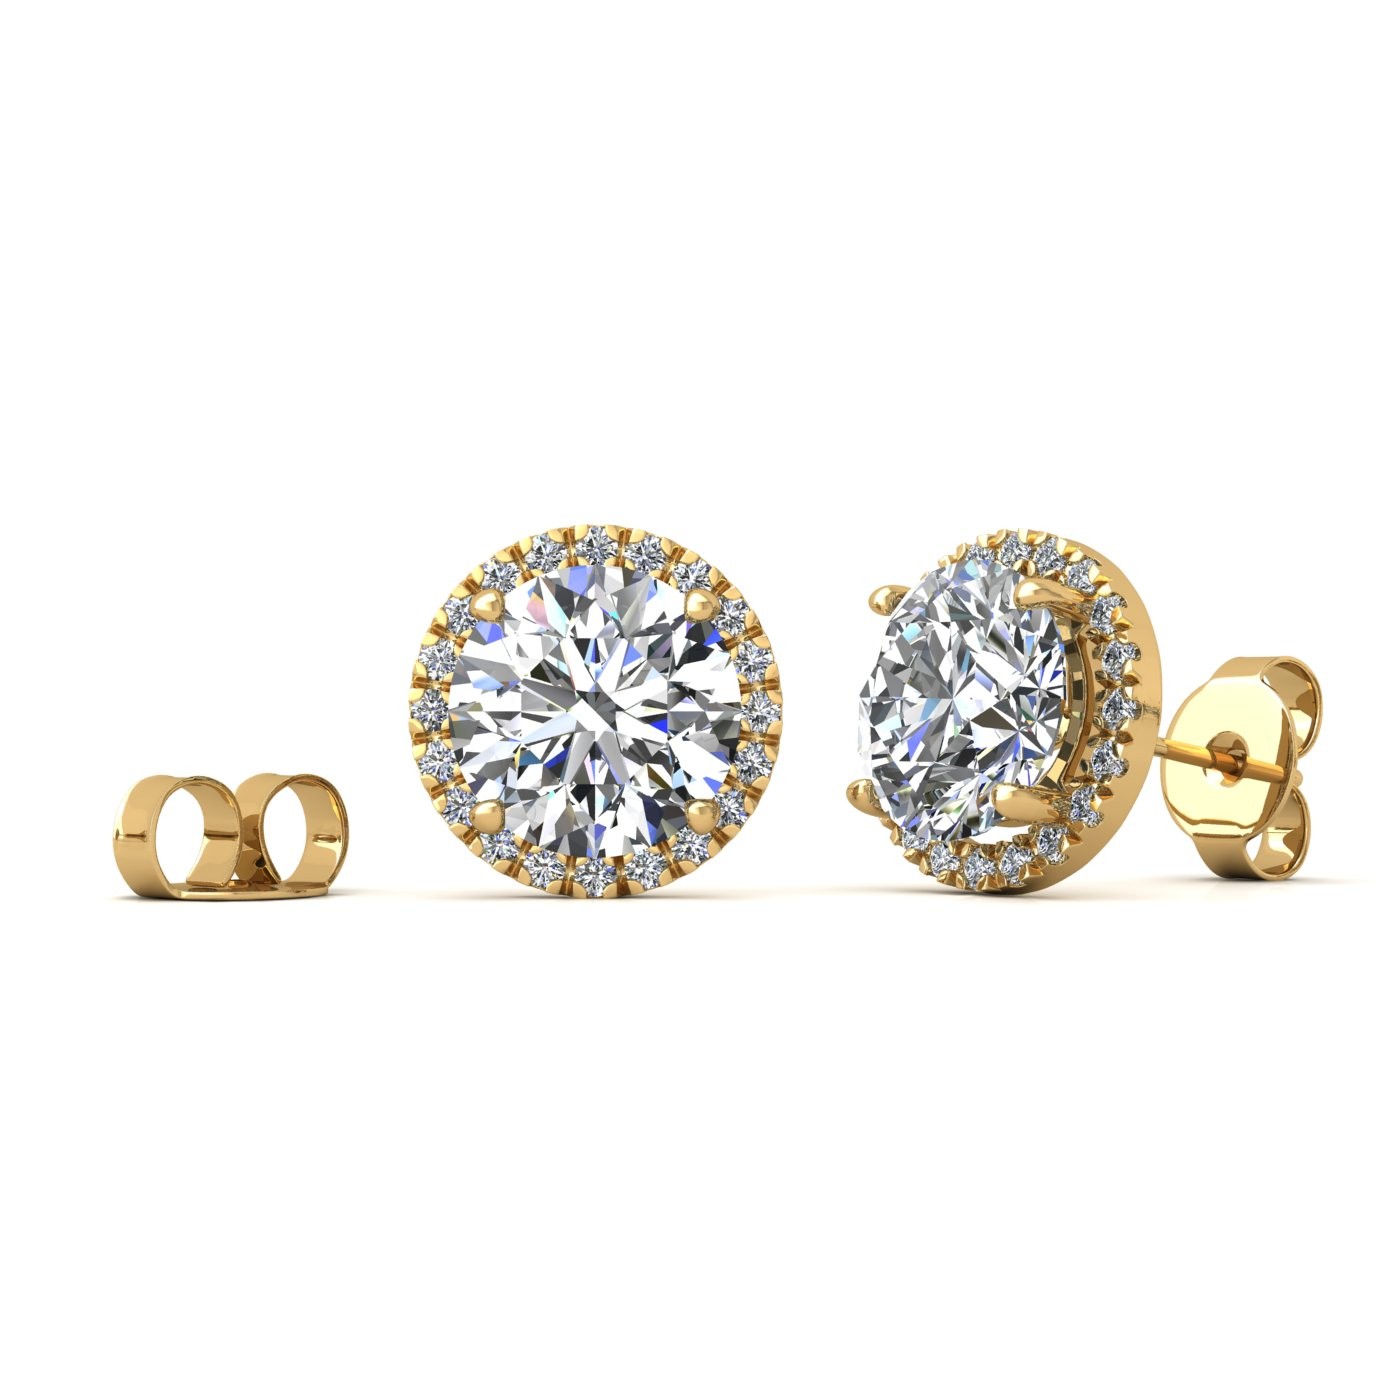 18k white gold 1 ct each (2,0 tcw) 4 prongs round shape diamond earrings with diamond pavÉ set halo Photos & images